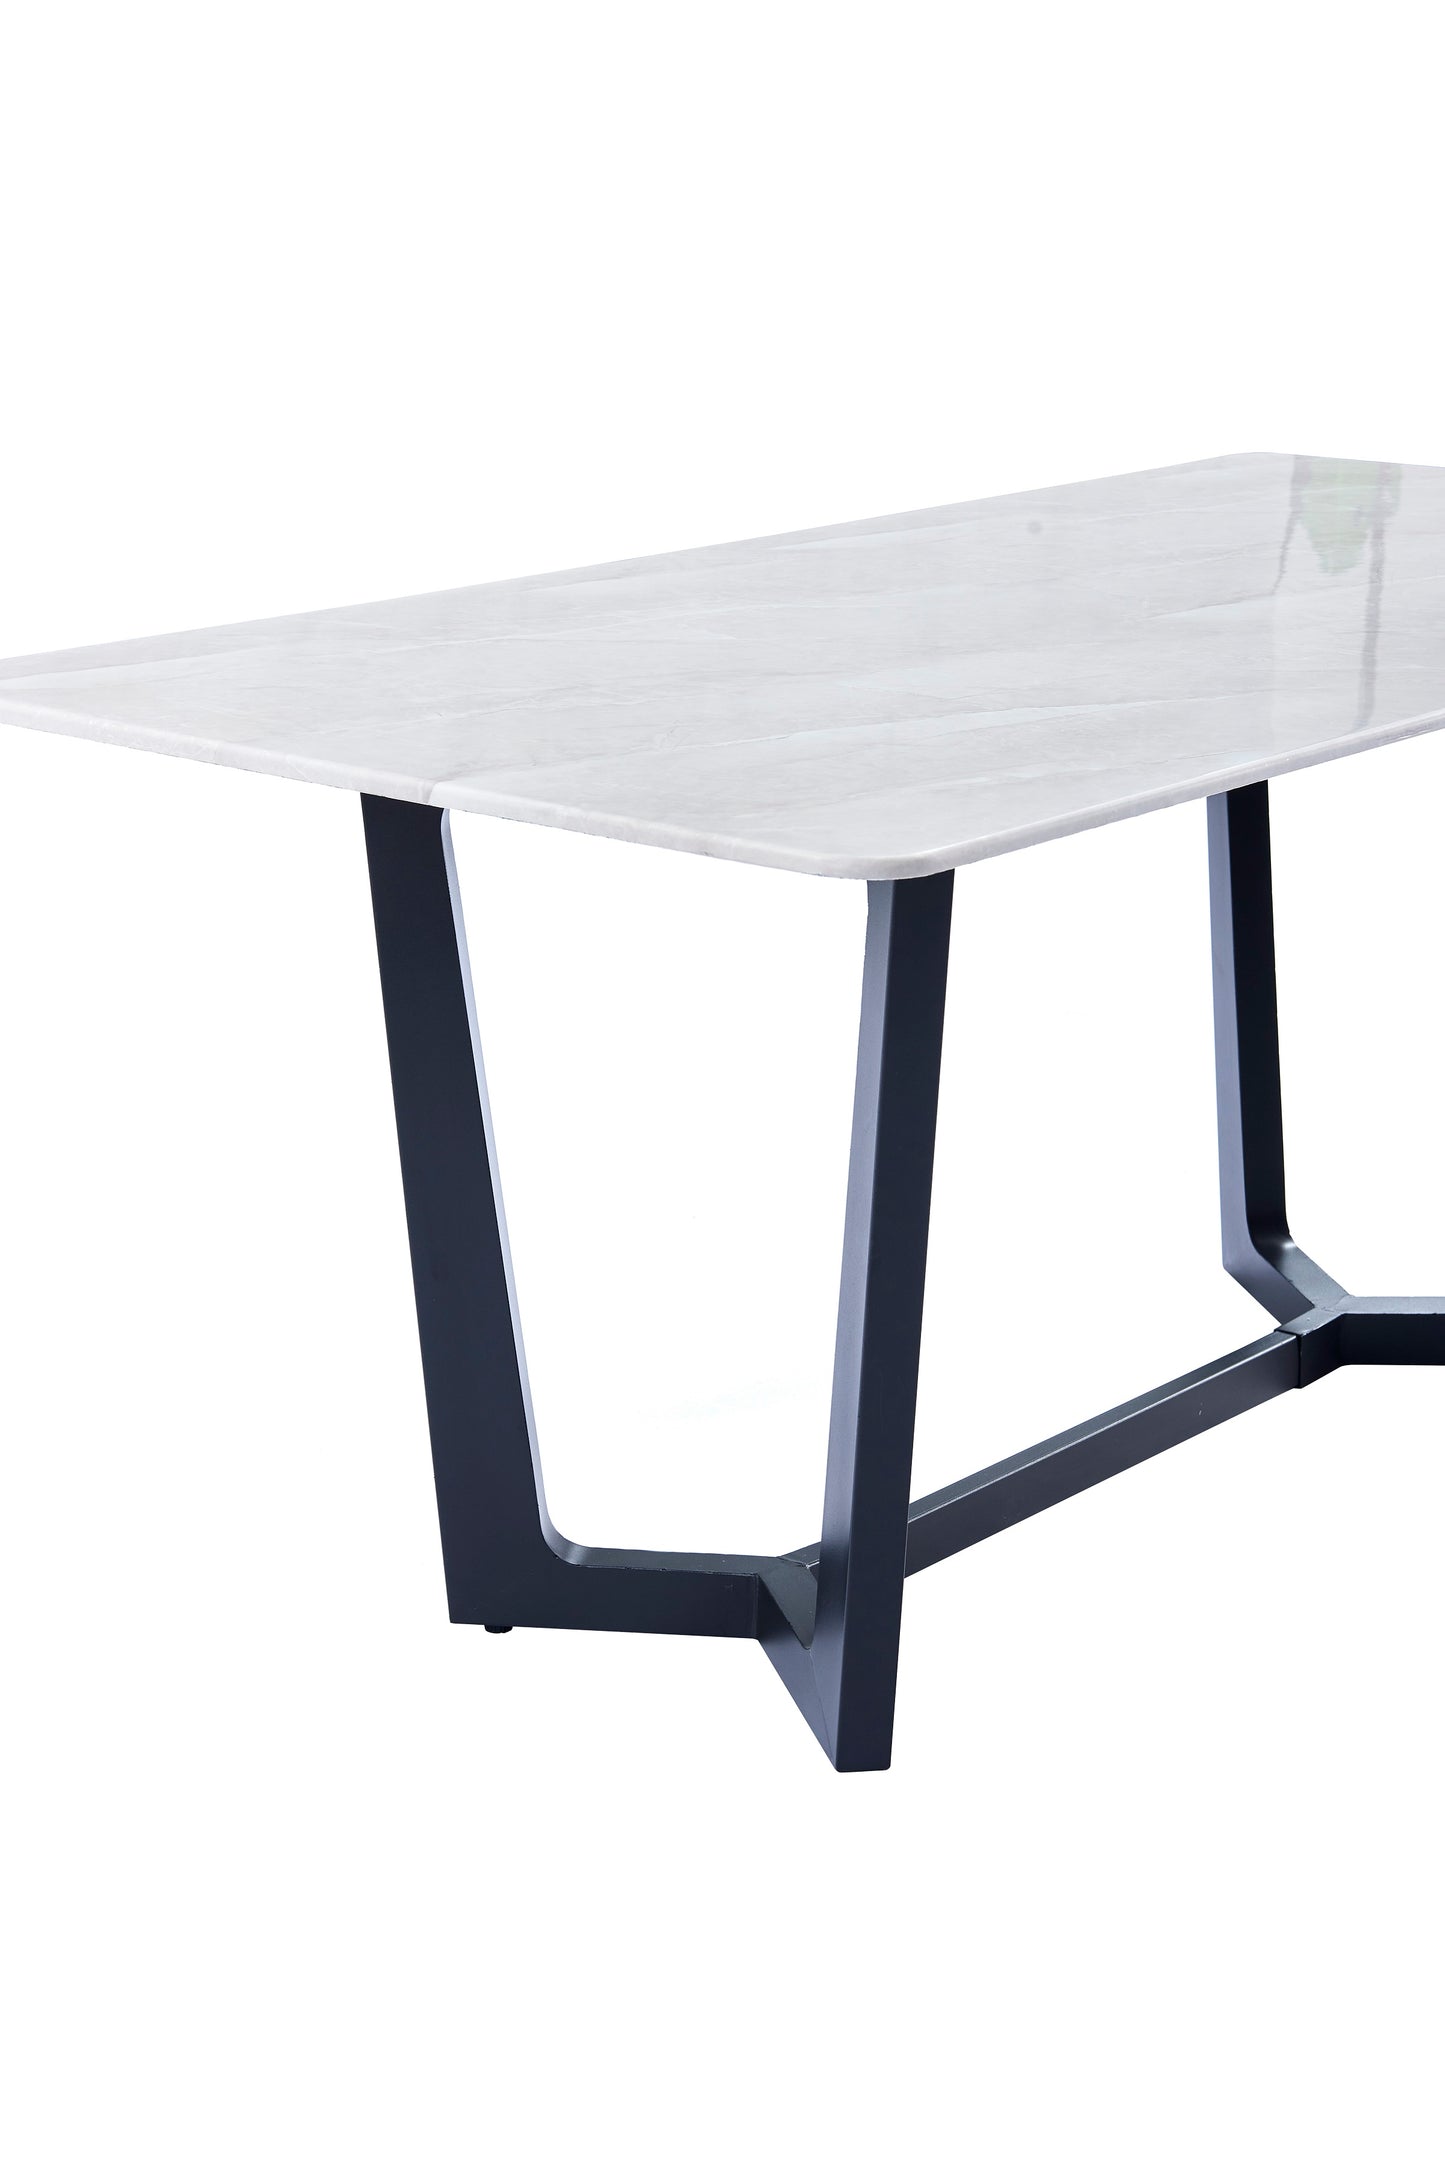 Barley Grey Modern Design Rectangular Marble Stone Top Dining Table 1.5m/1.8m